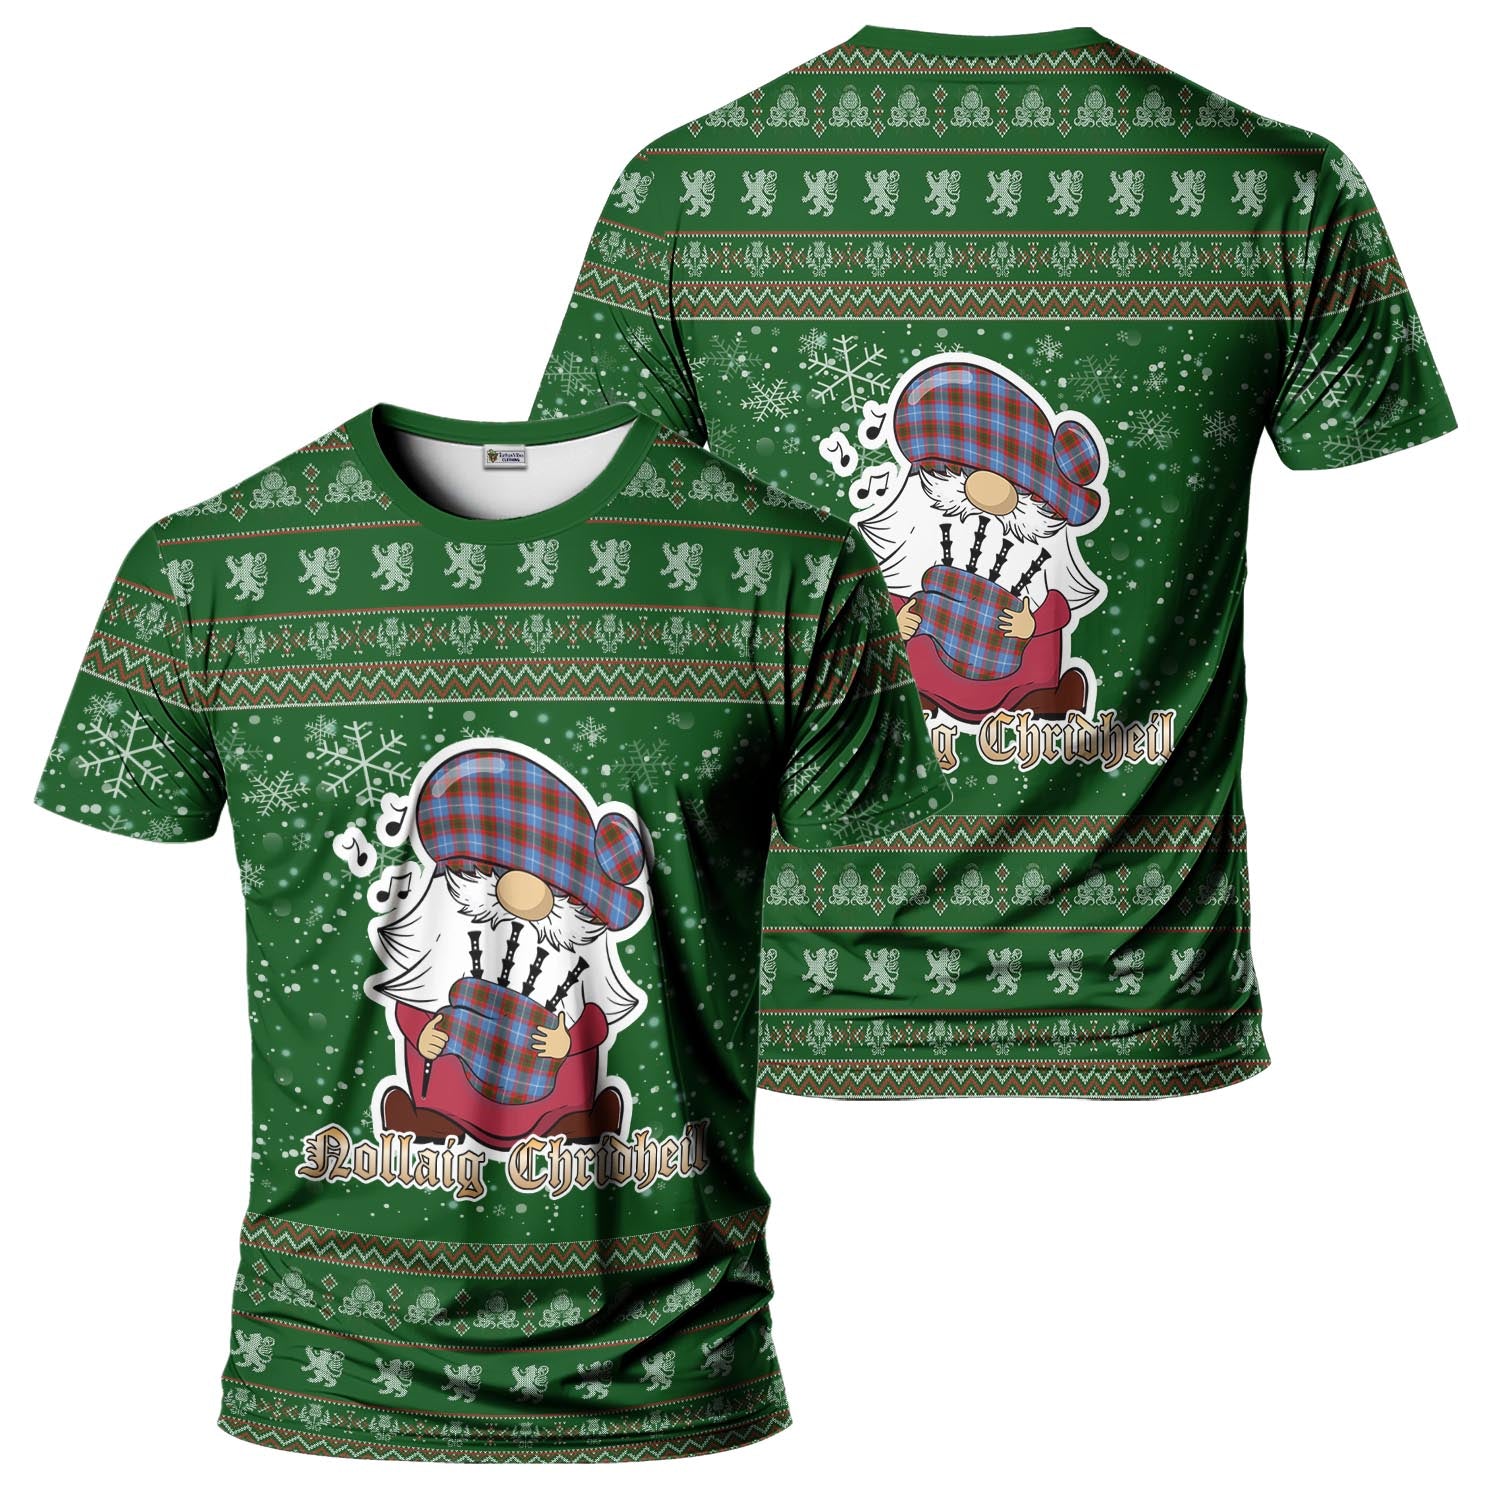 Congilton Clan Christmas Family T-Shirt with Funny Gnome Playing Bagpipes Men's Shirt Green - Tartanvibesclothing